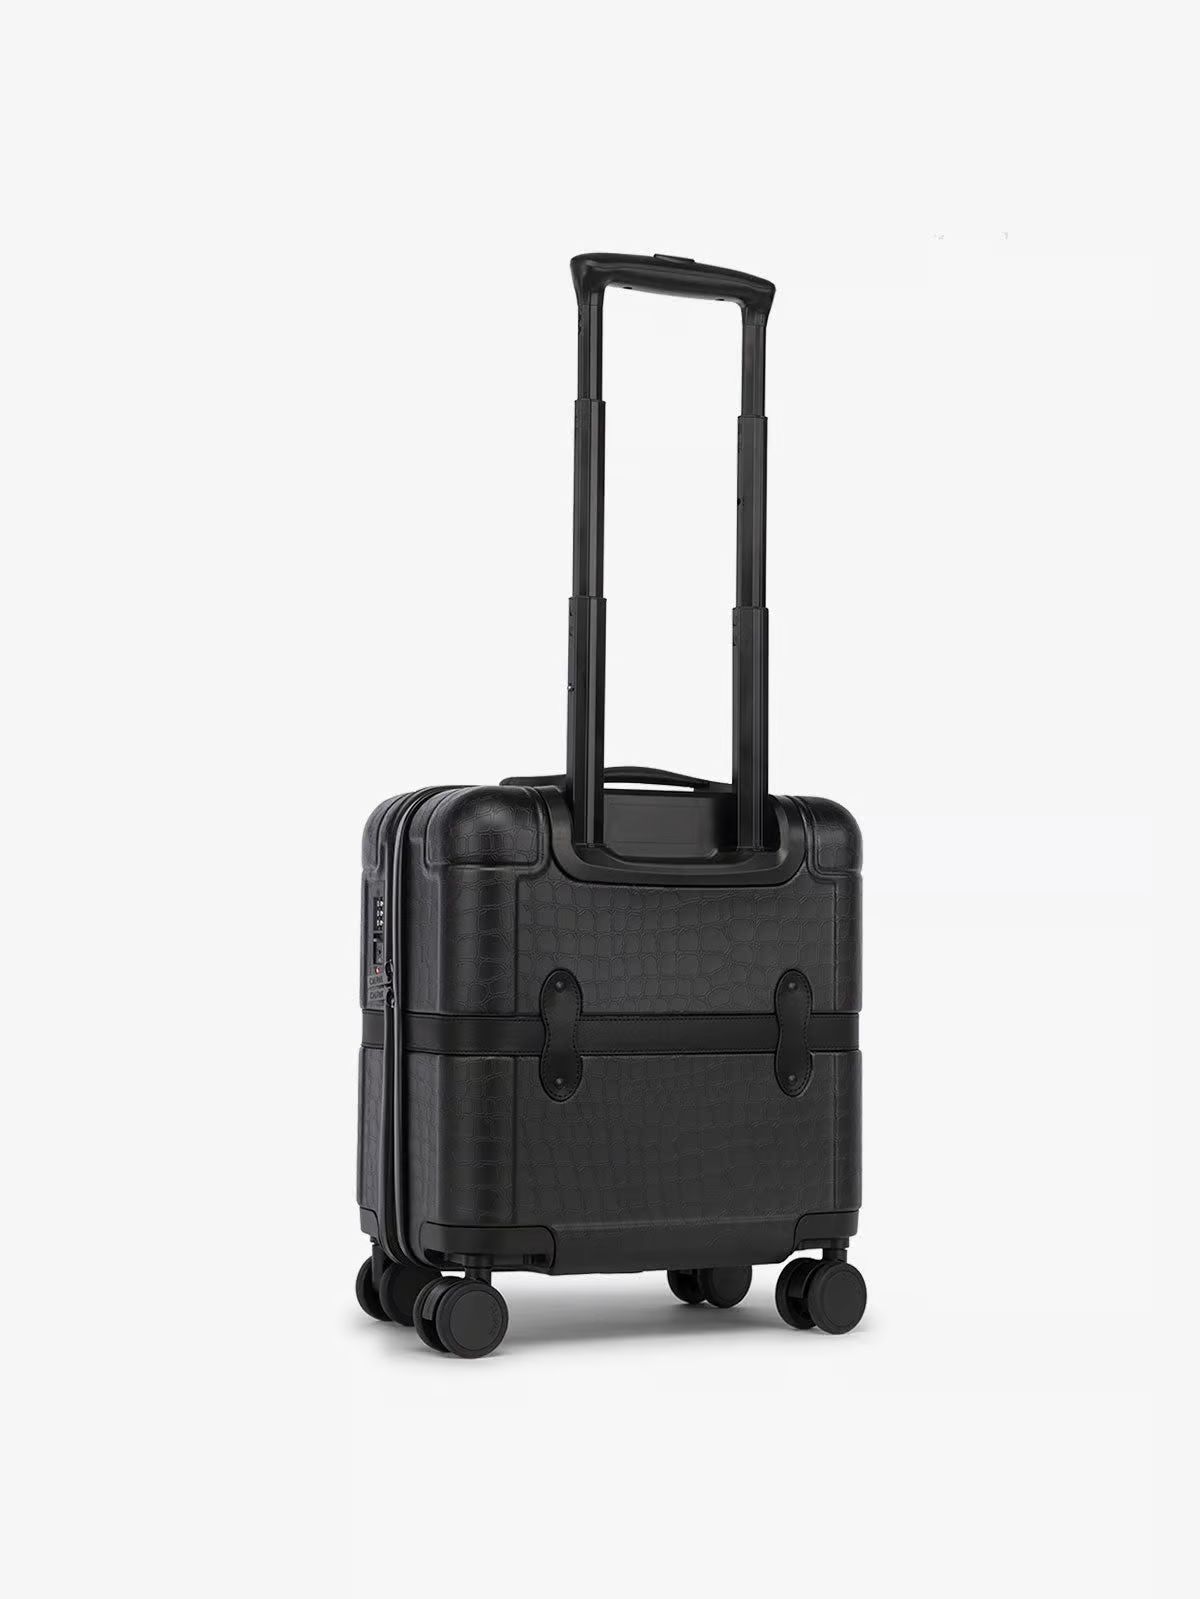 Trnk Mini Carry-On Luggage | CALPAK | CALPAK Travel